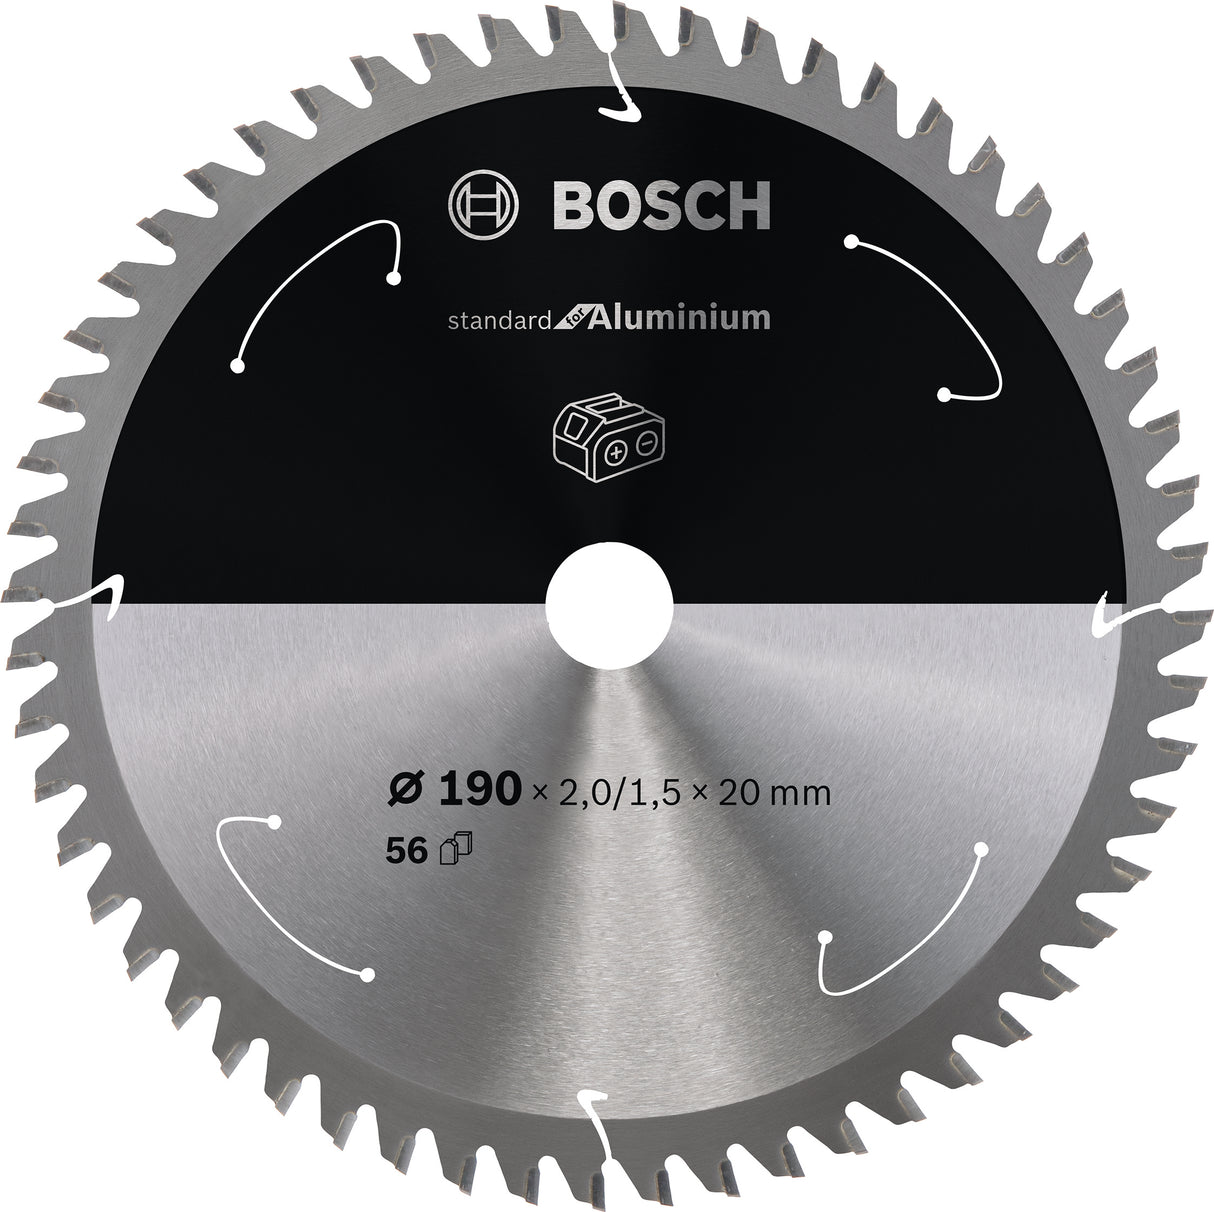 Bosch Professional Aluminium Circular Saw Blade for Cordless Saws - 190x2/1.5x20 T56 - Standard